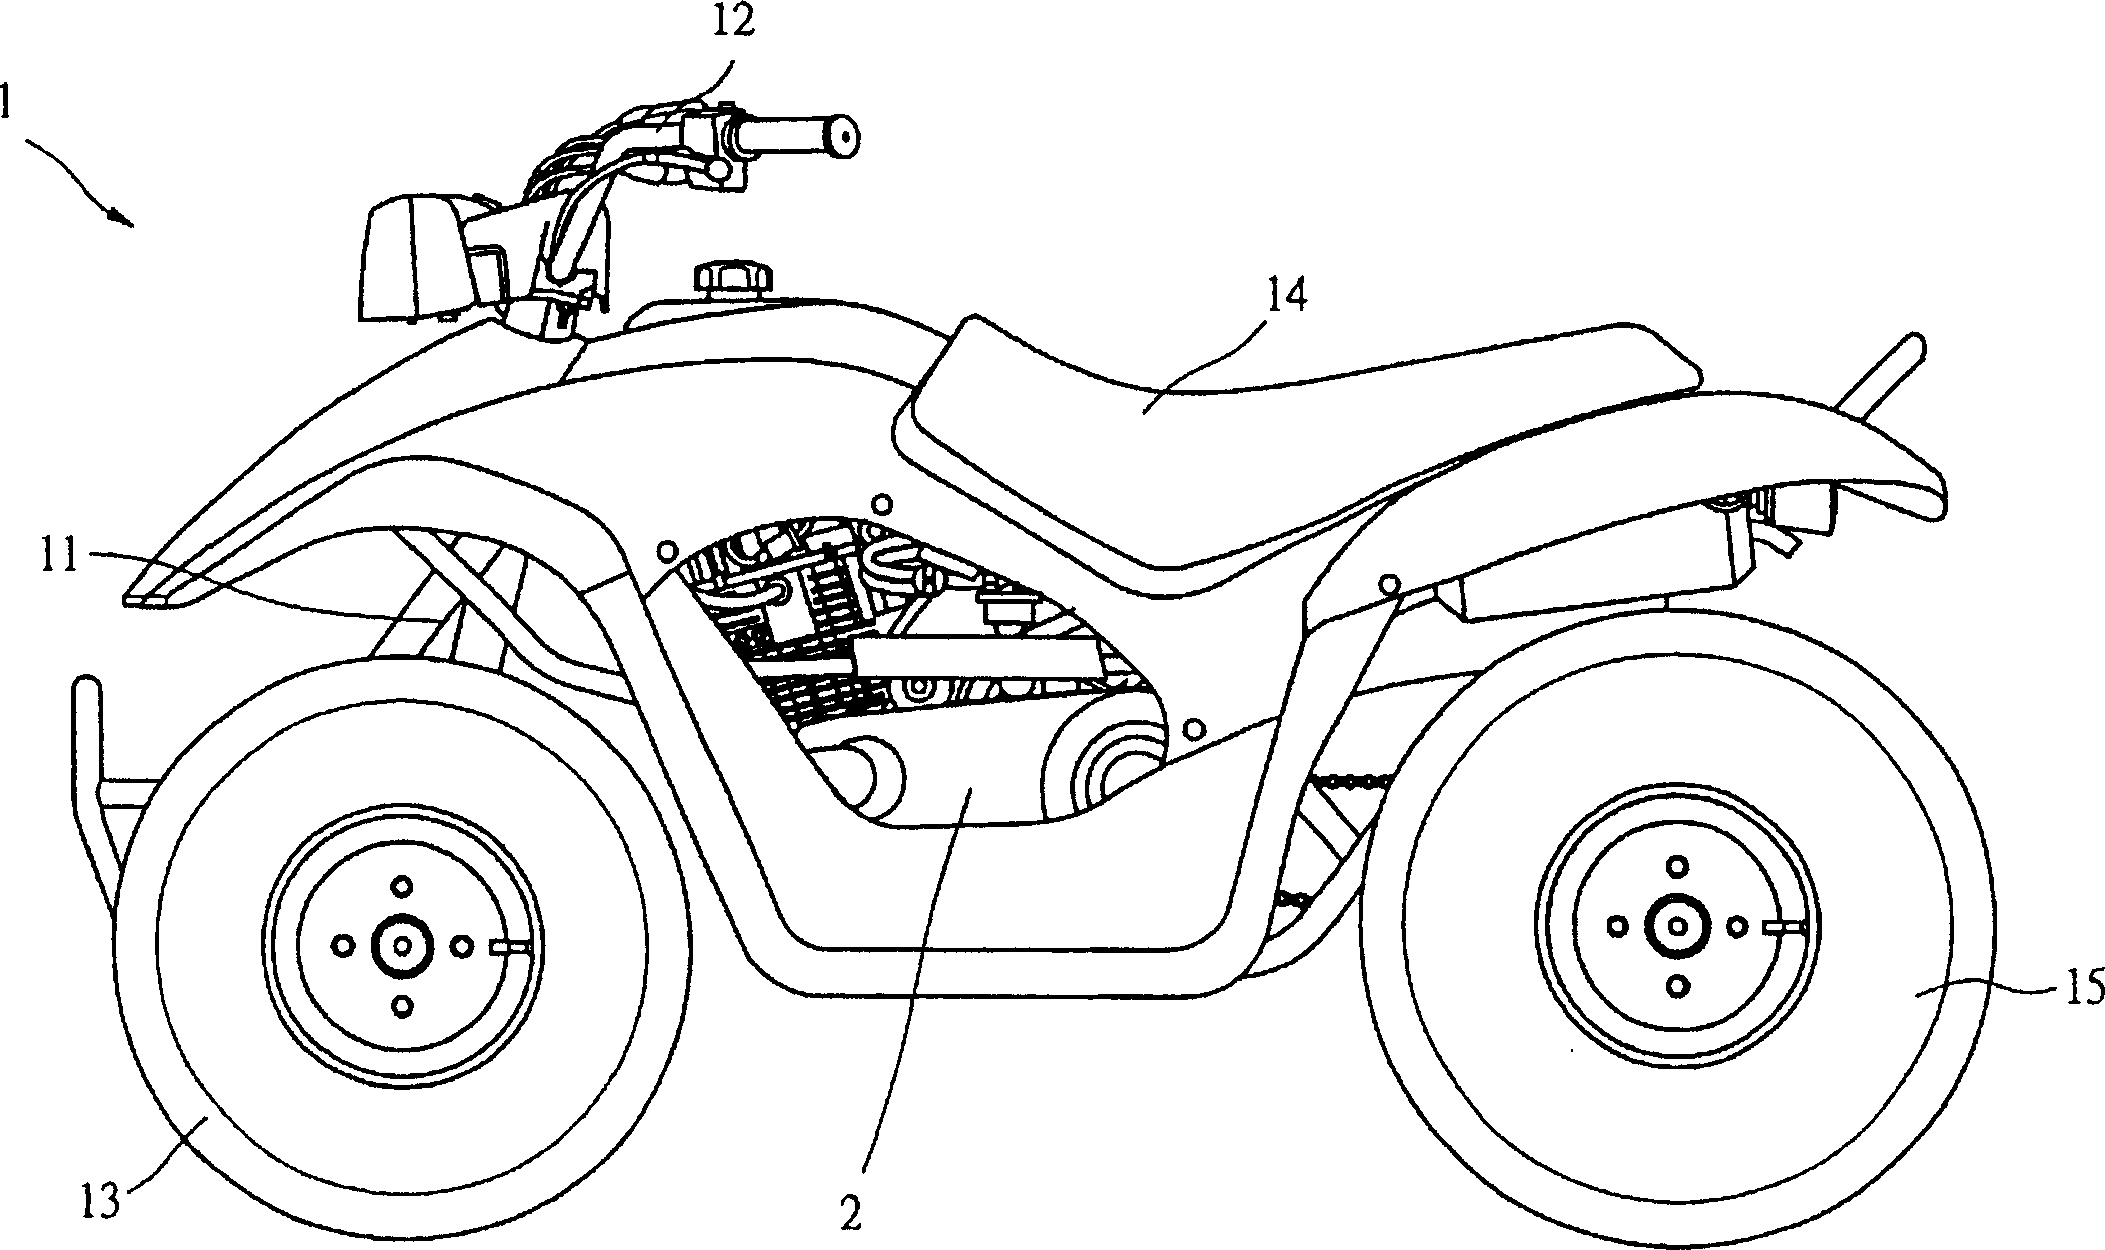 All-terrain vehicle sprocket buffer device